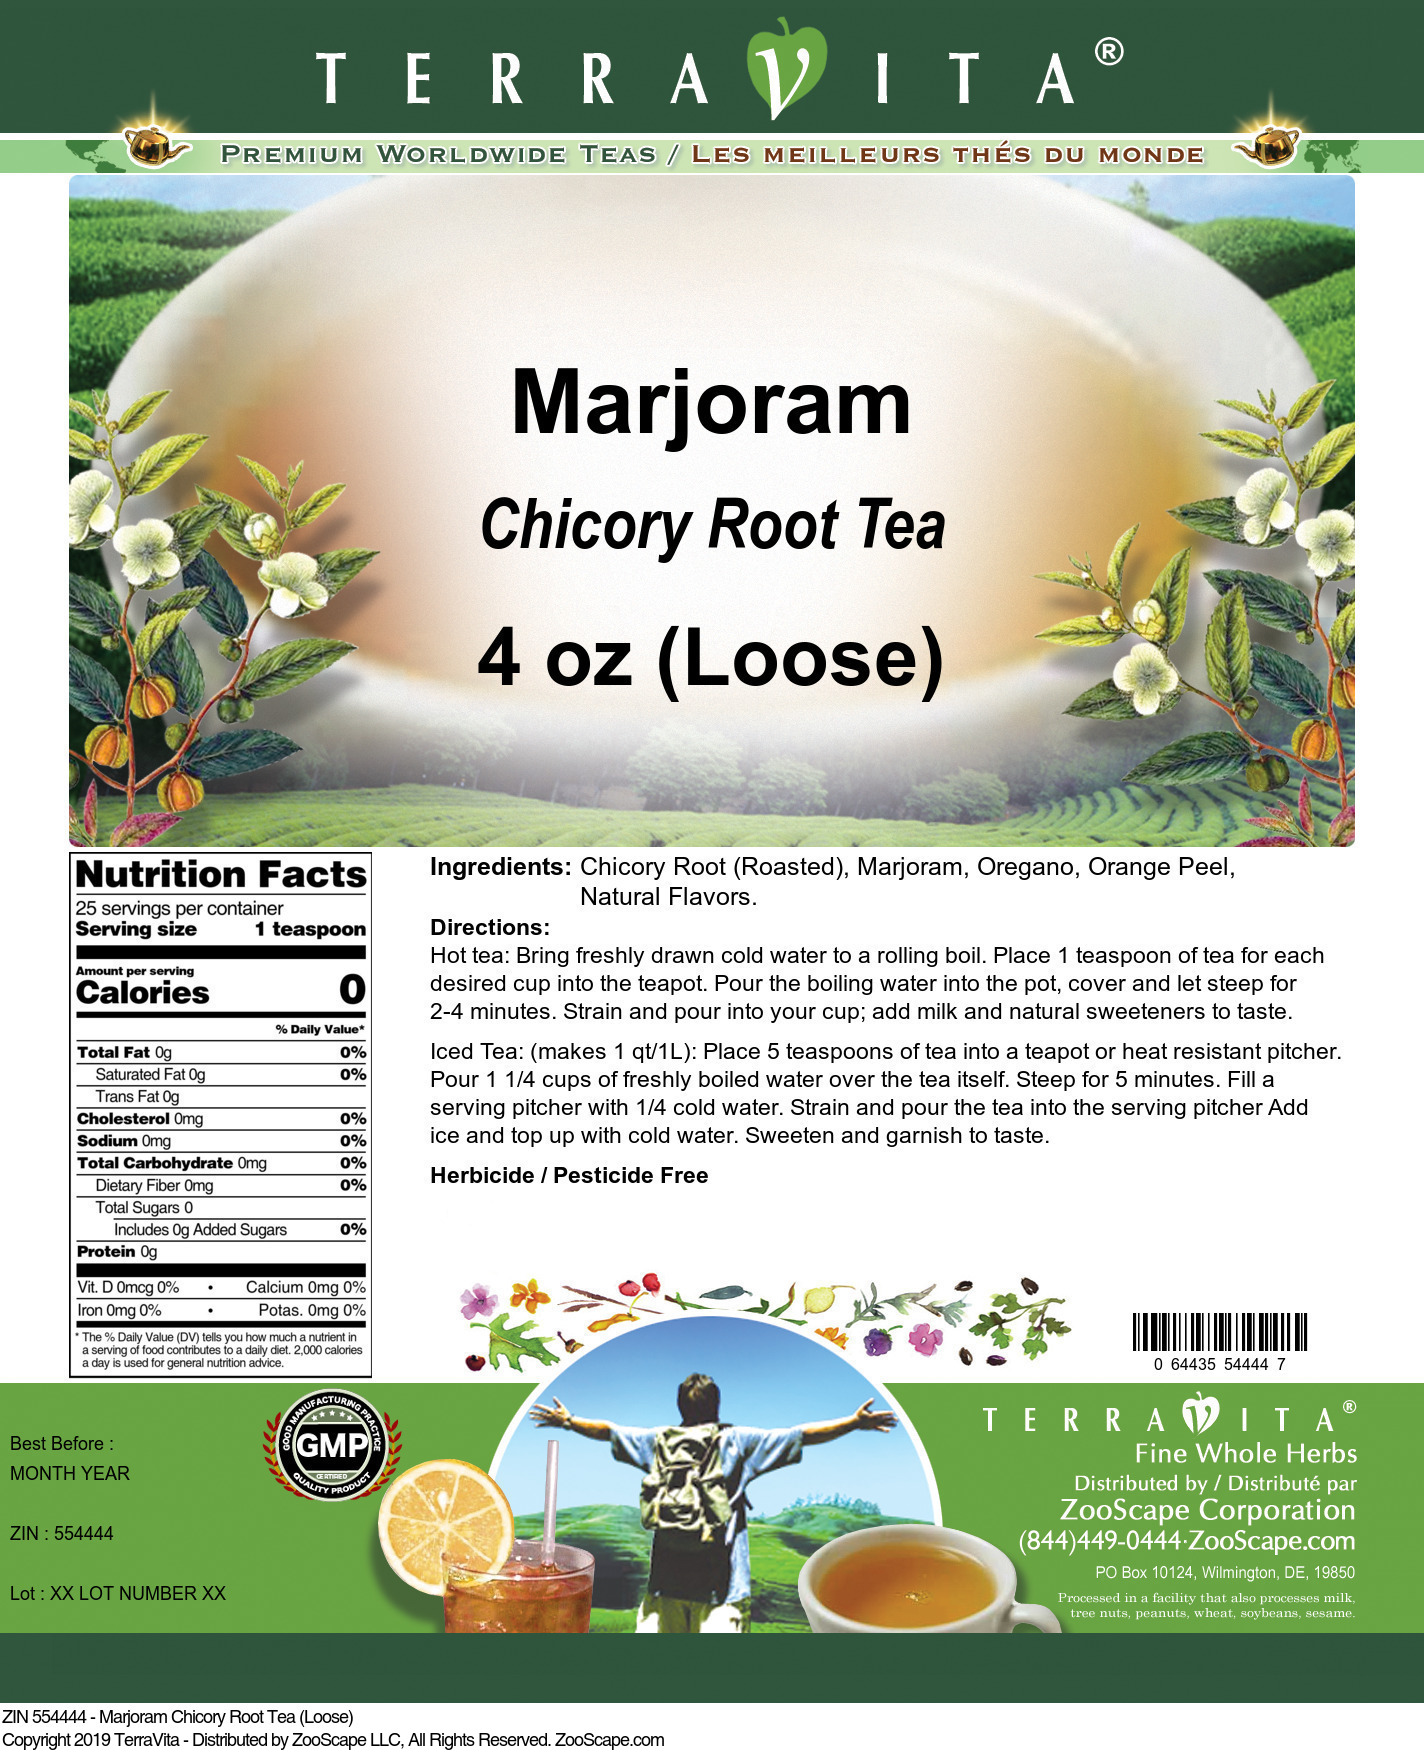 Marjoram Chicory Root Tea (Loose) - Label